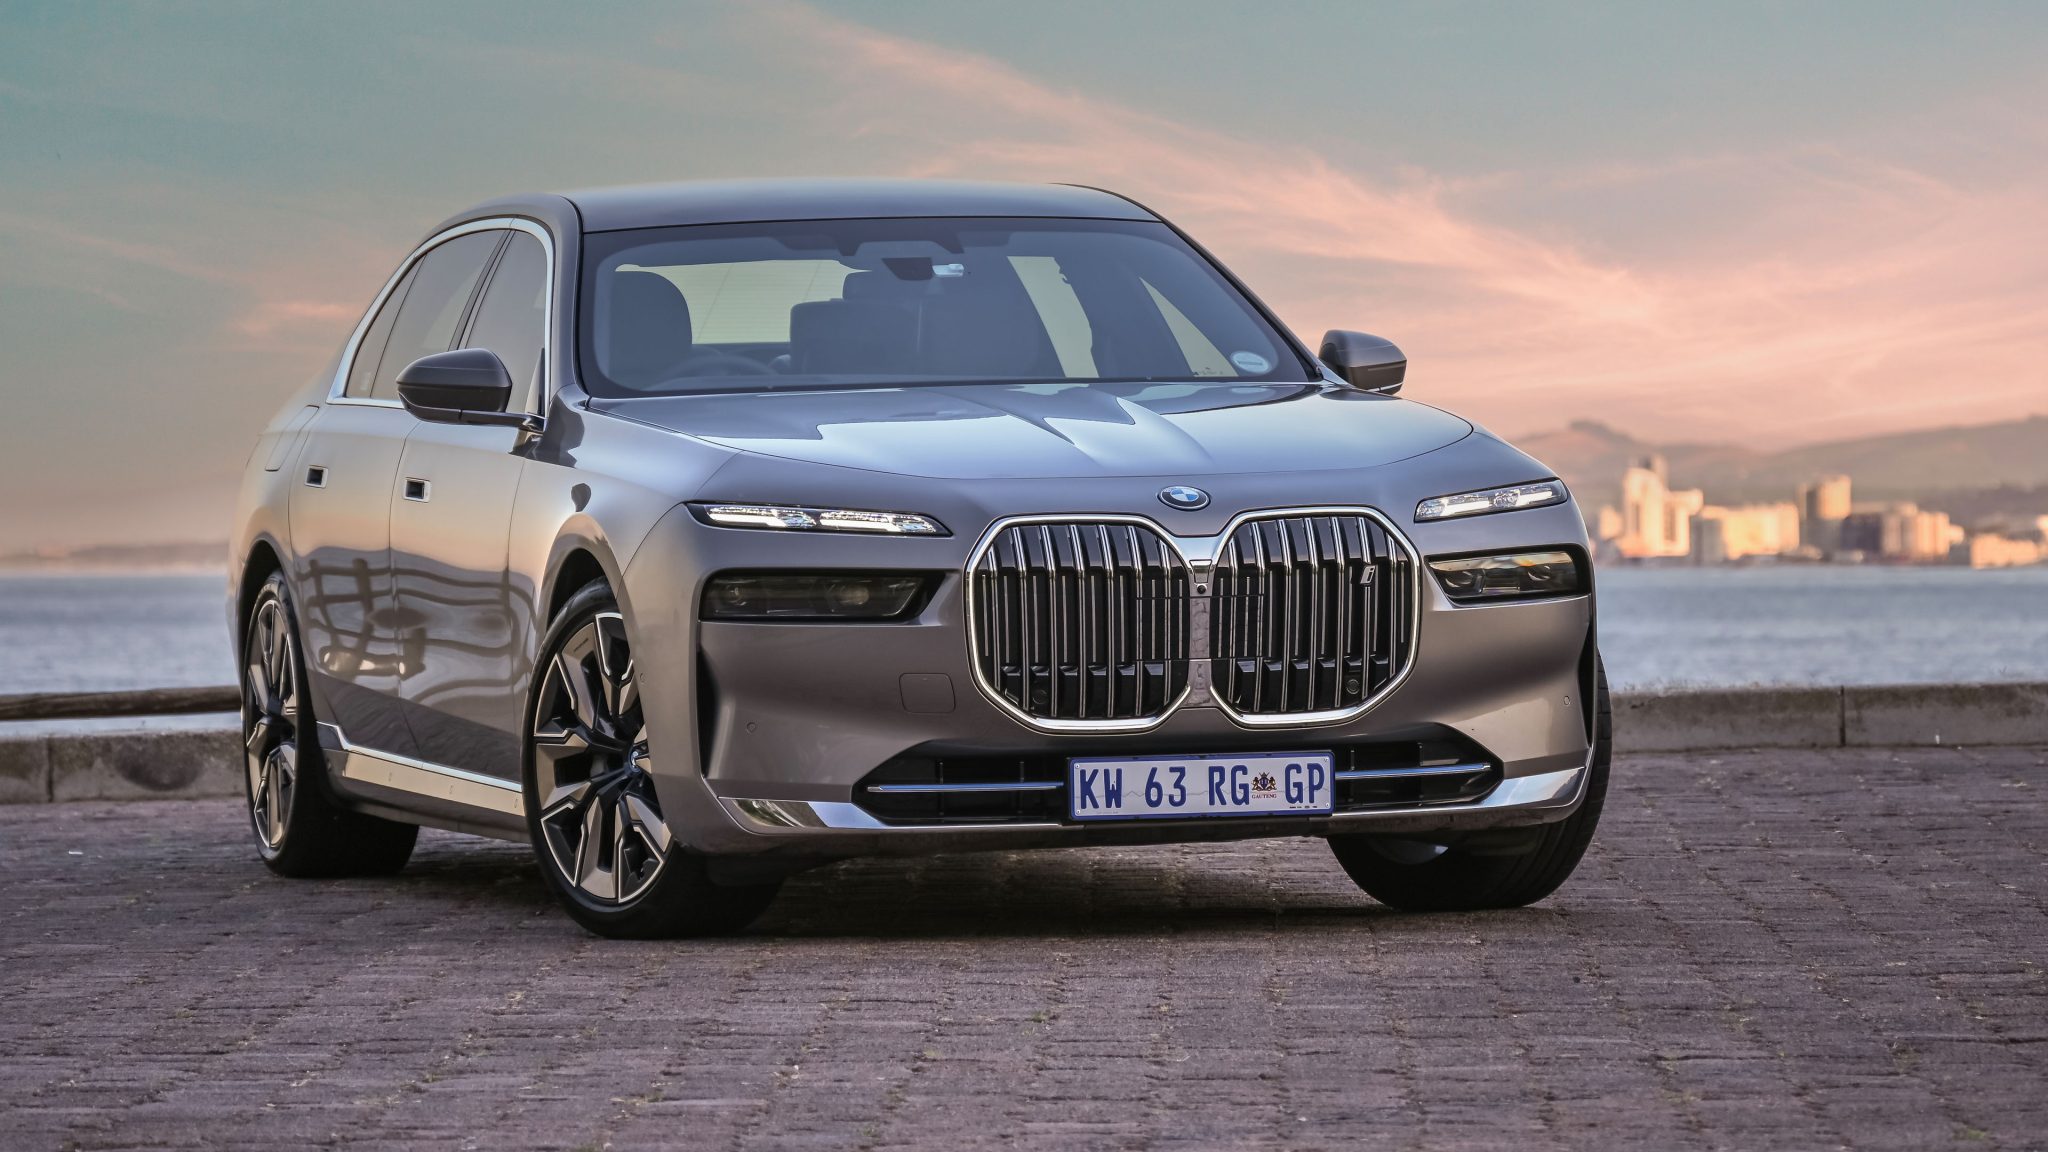 2022 BMW i4 Revealed With 523 Horsepower And 300 Miles Of Range